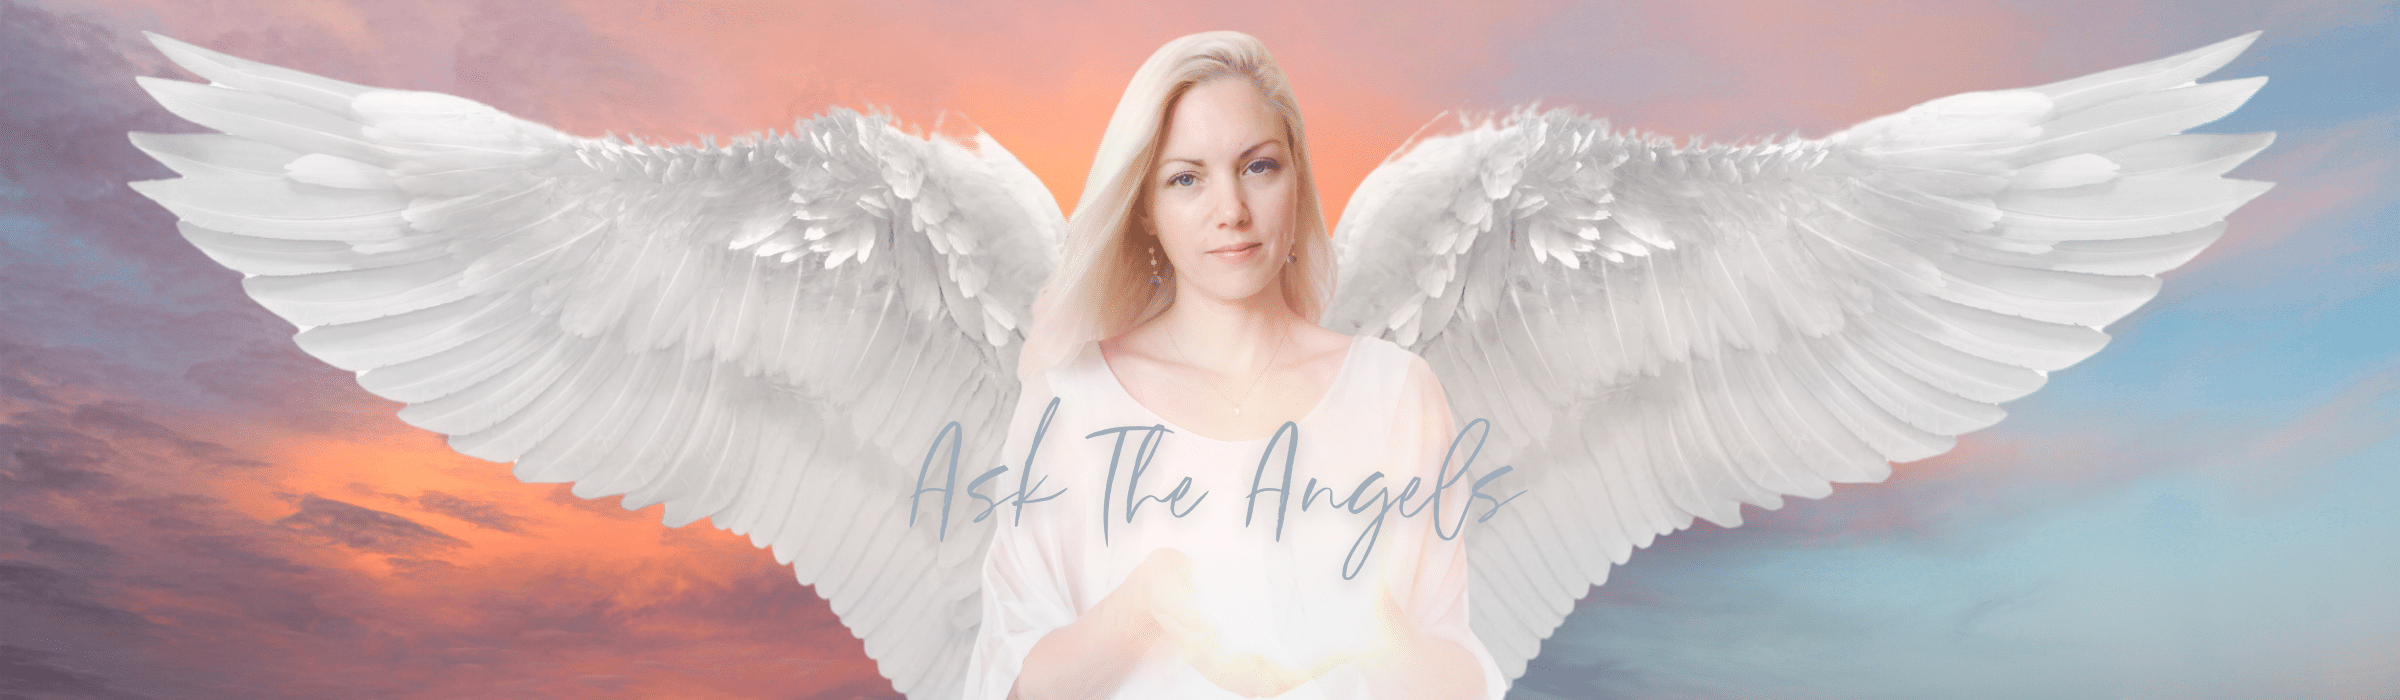 archangel angels